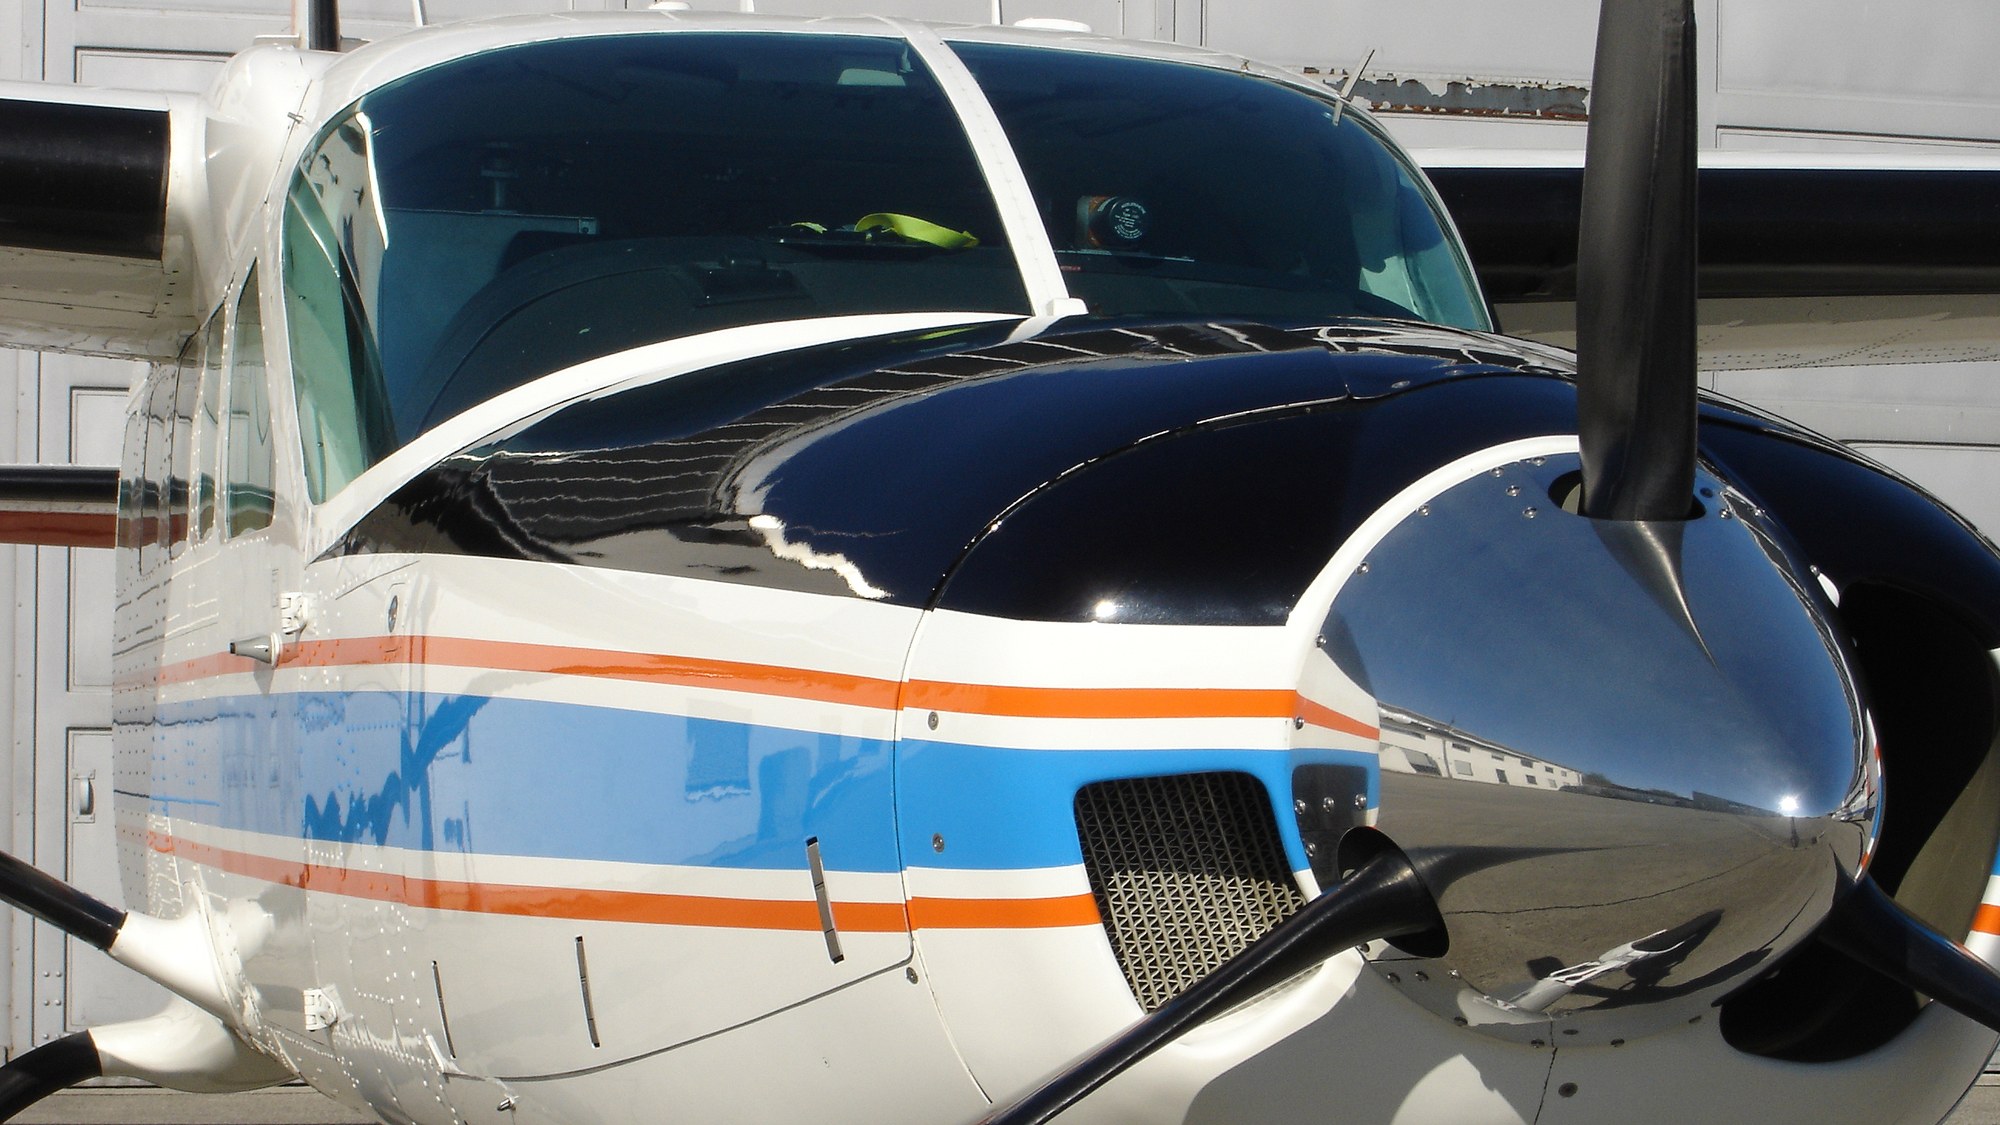 The Cessna 208B Grand Caravan single-engine turboprop aircraft